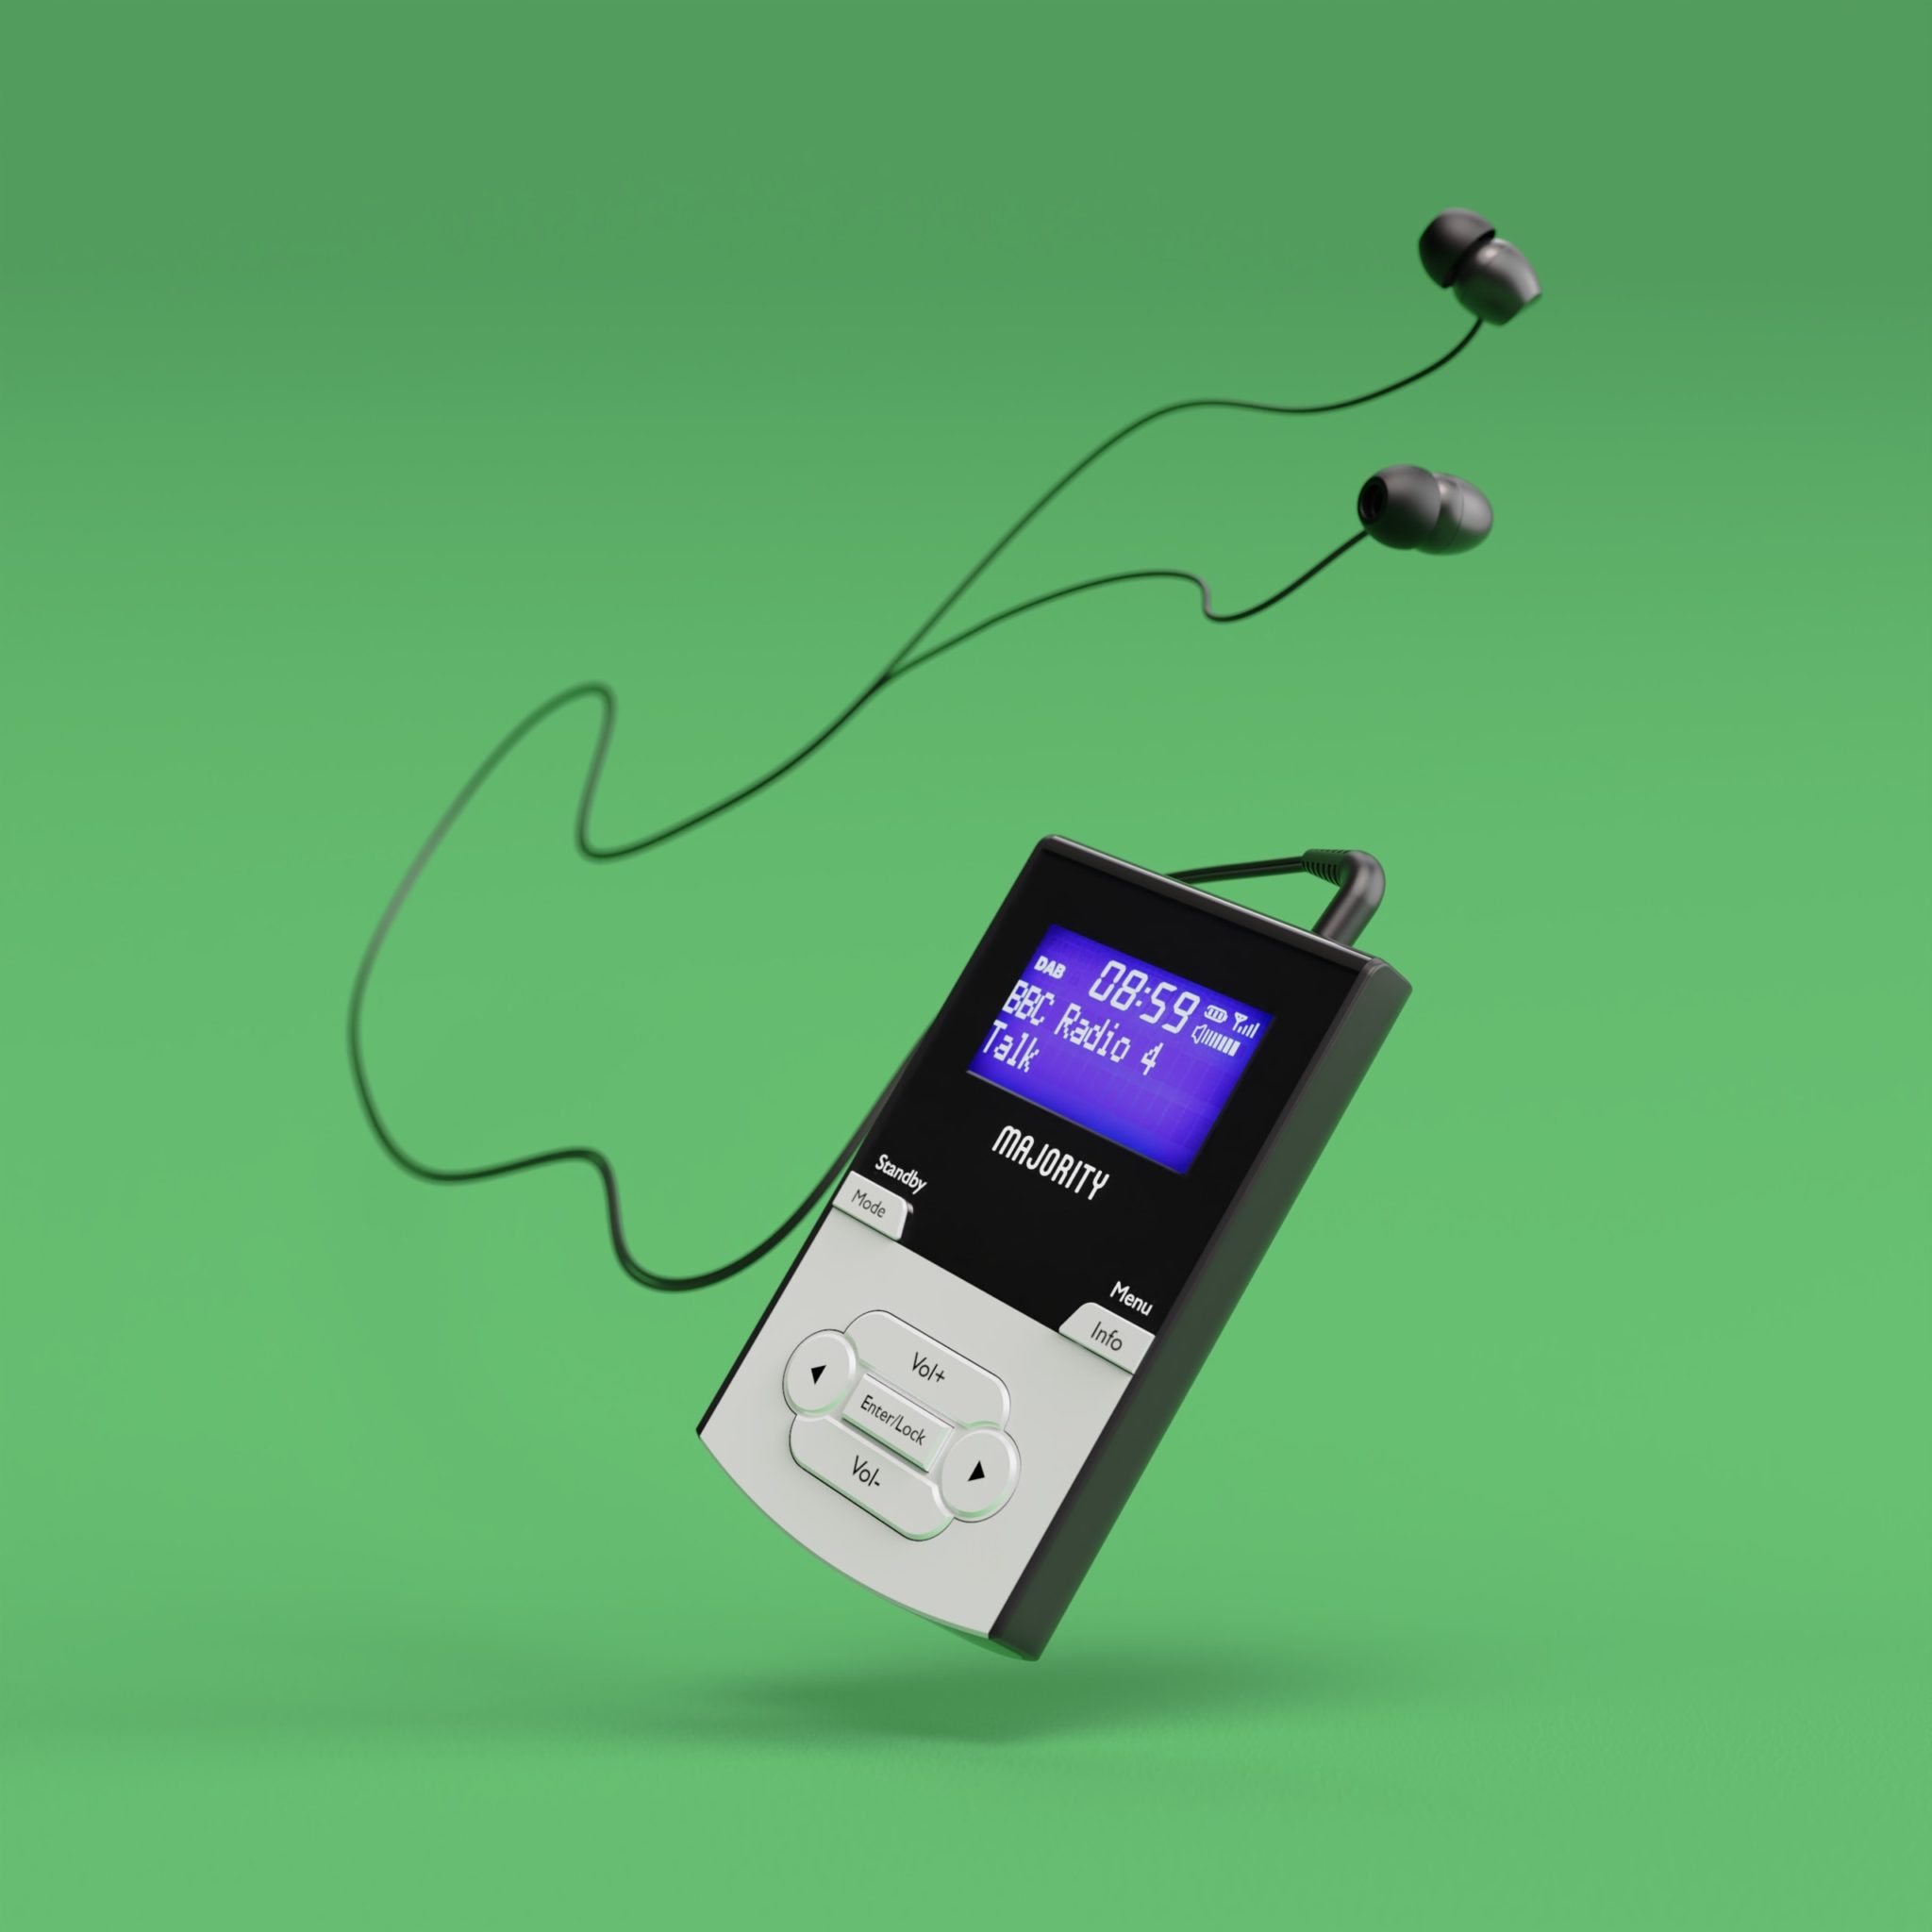 Pocket Portable DAB Radio - Petersfield on Green Background